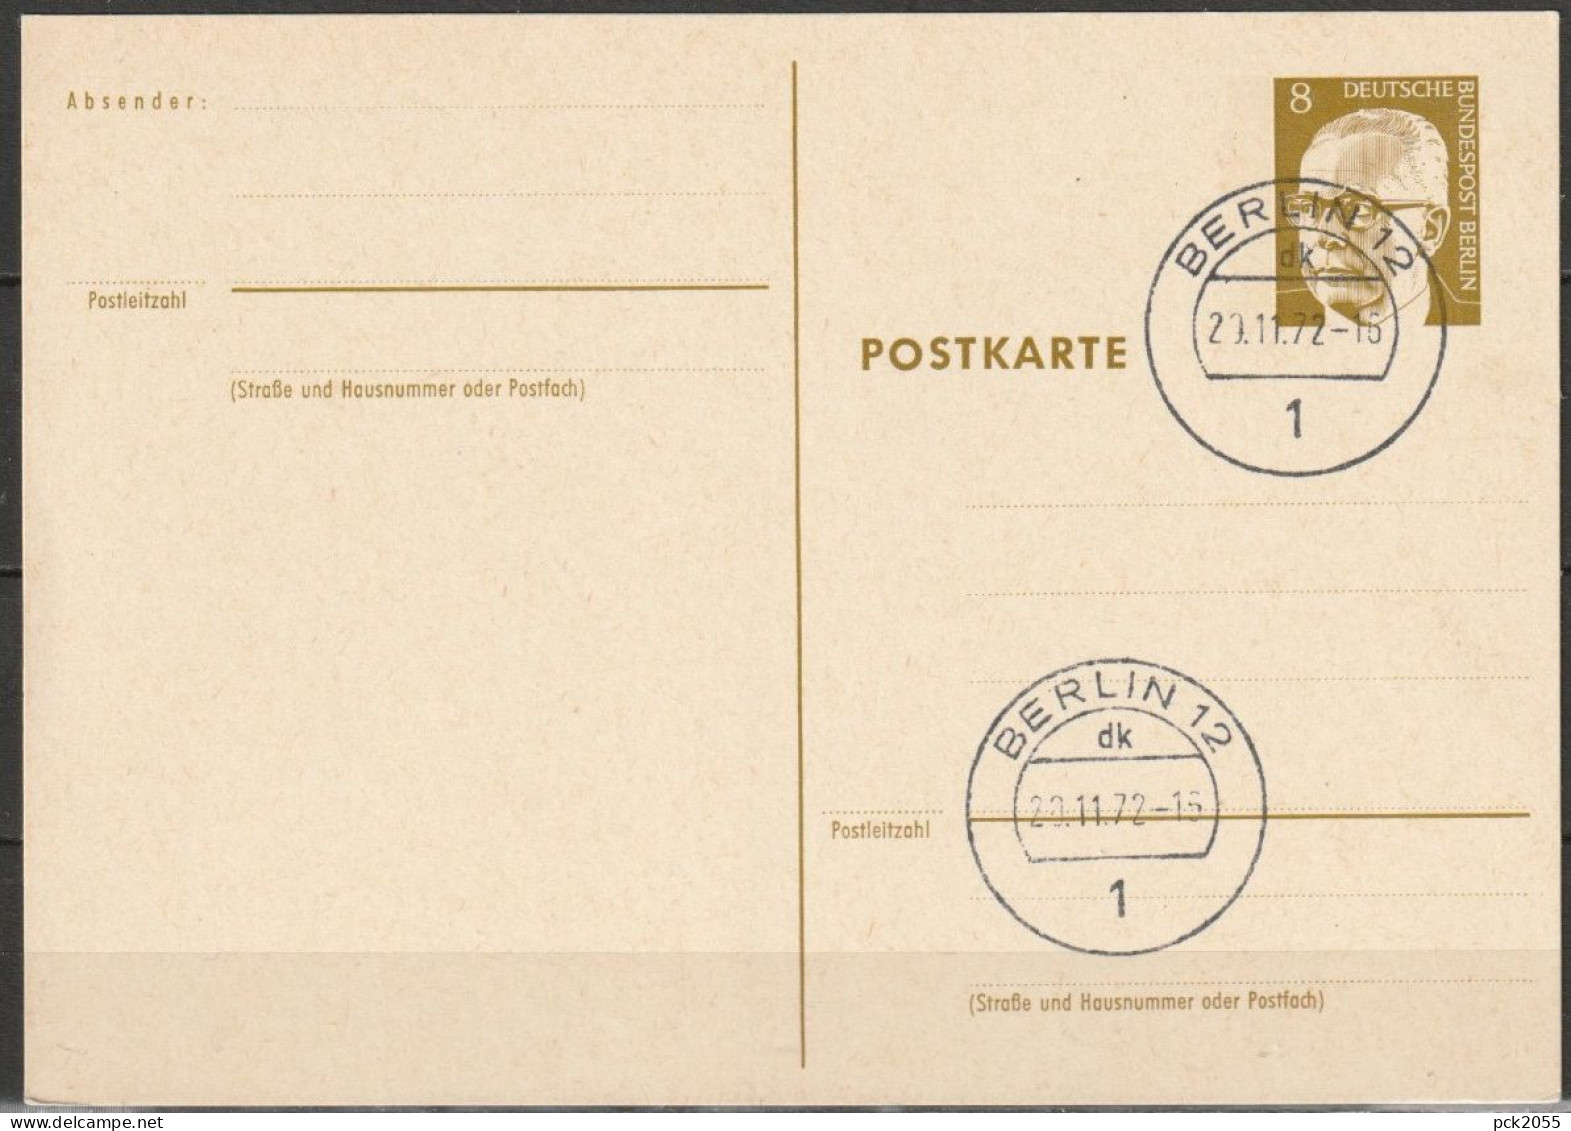 Berlin Ganzsache 1971/72 Mi.-Nr. P 80 Tagesstempel BERLIN 20.11.72  ( PK 207 ) - Postkarten - Gebraucht